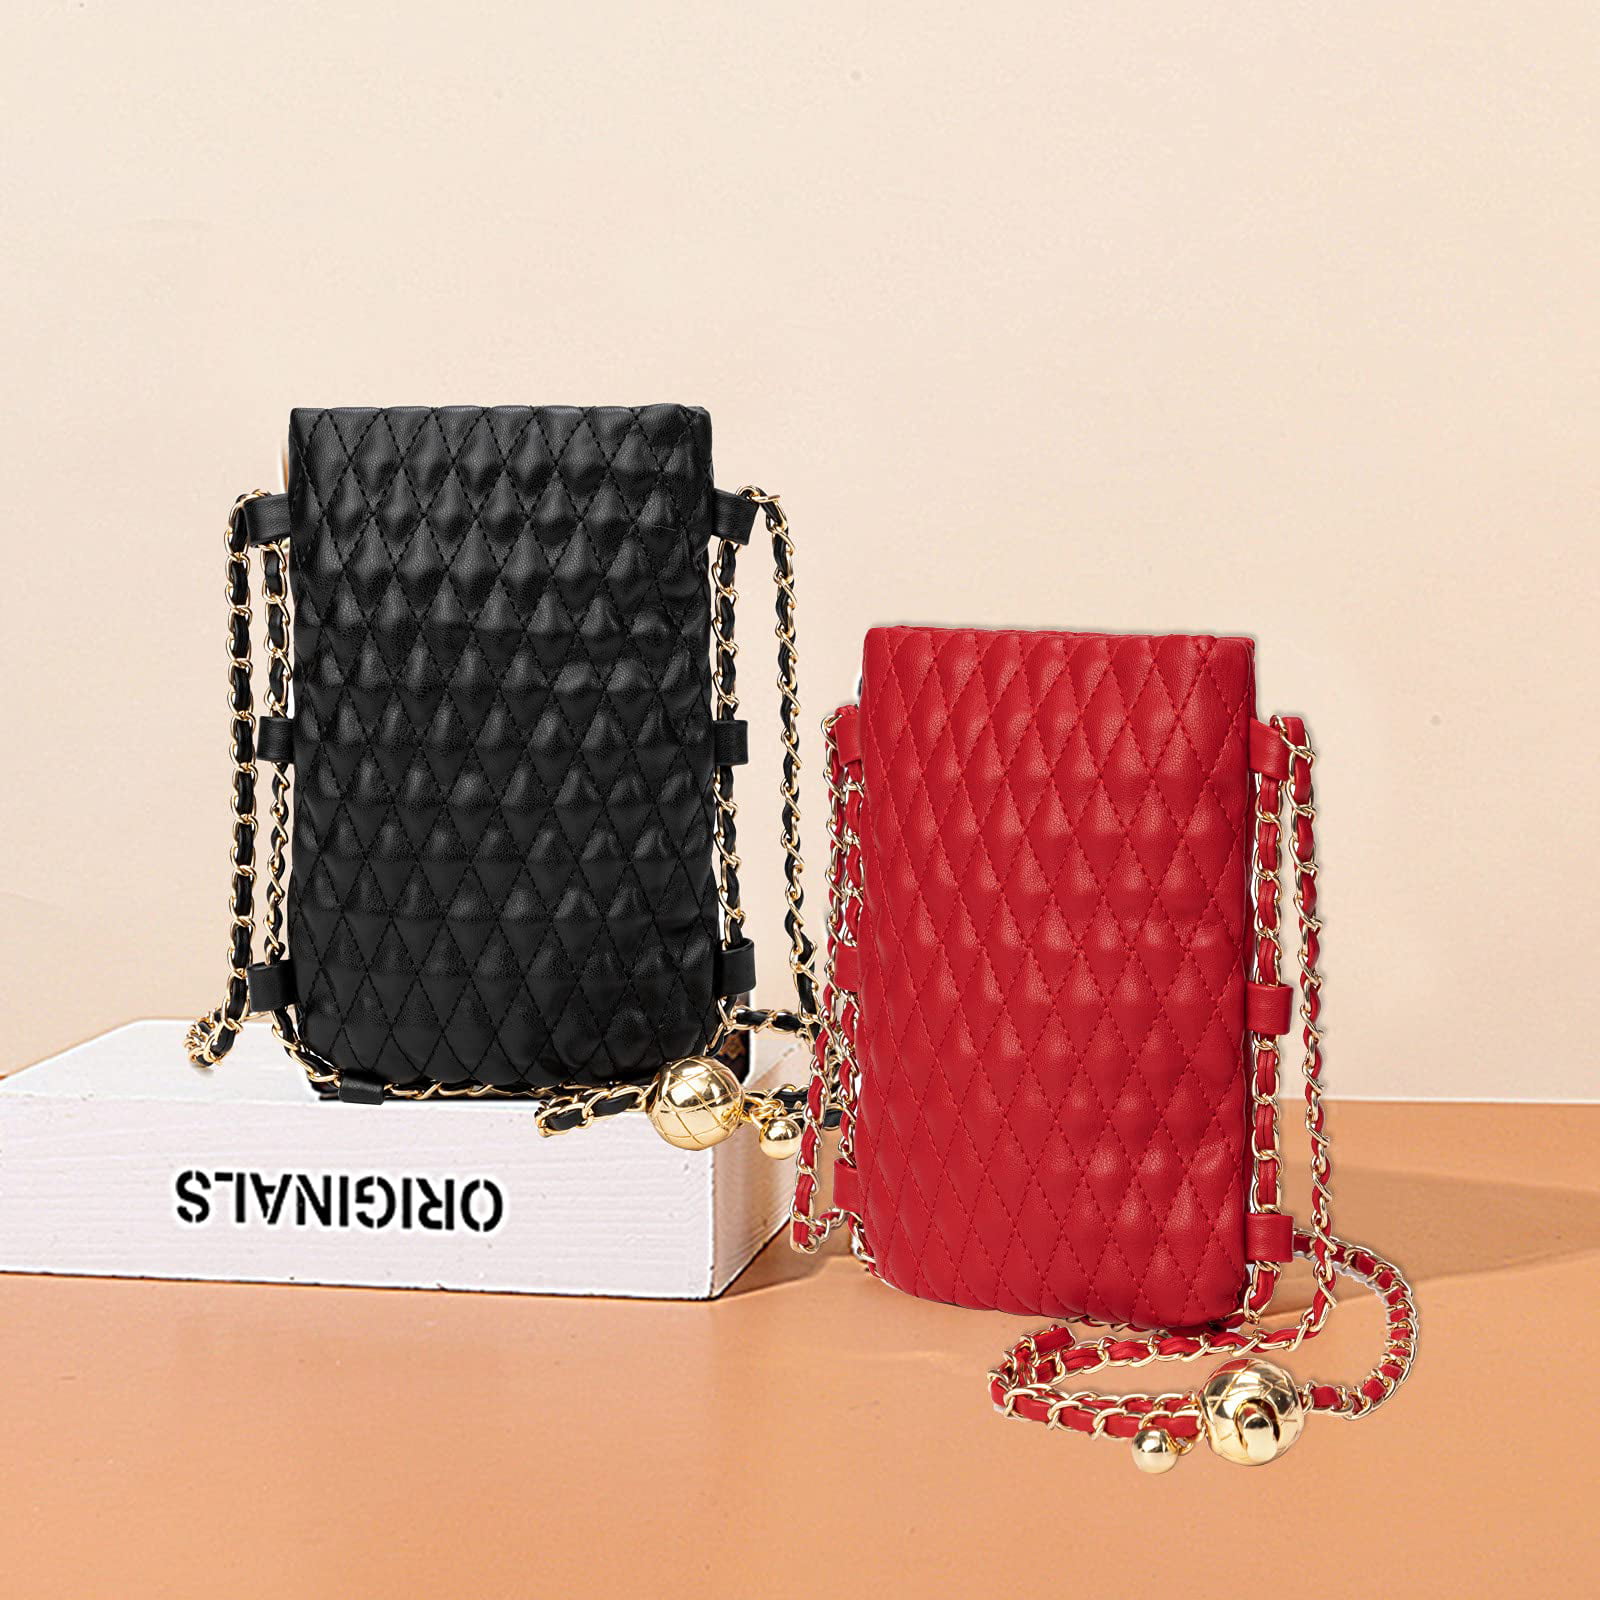 Sweetovo Women Crossbody Cell Phone Bag Small Messenger Shoulder Bag Handbag  Purse with Adjustable Strap Brown: Handbags